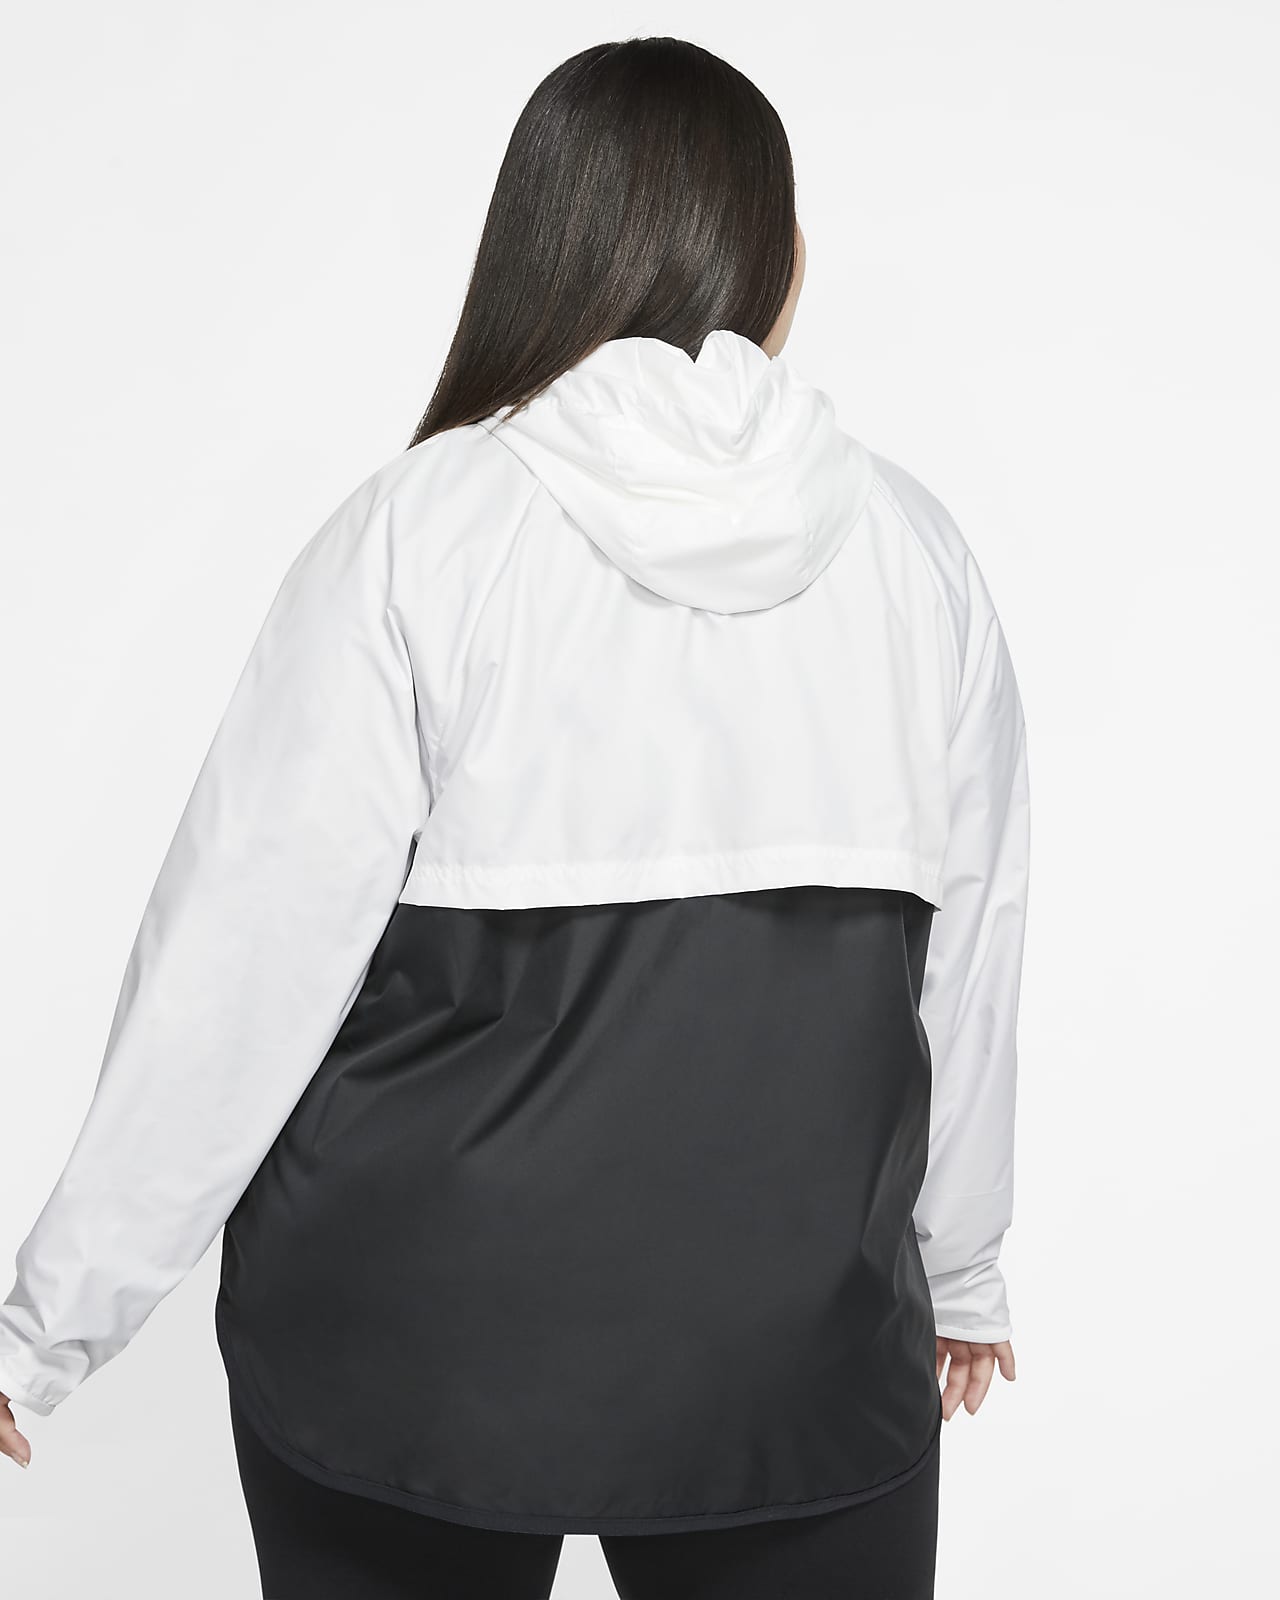 nike black and white windbreaker women's jacket